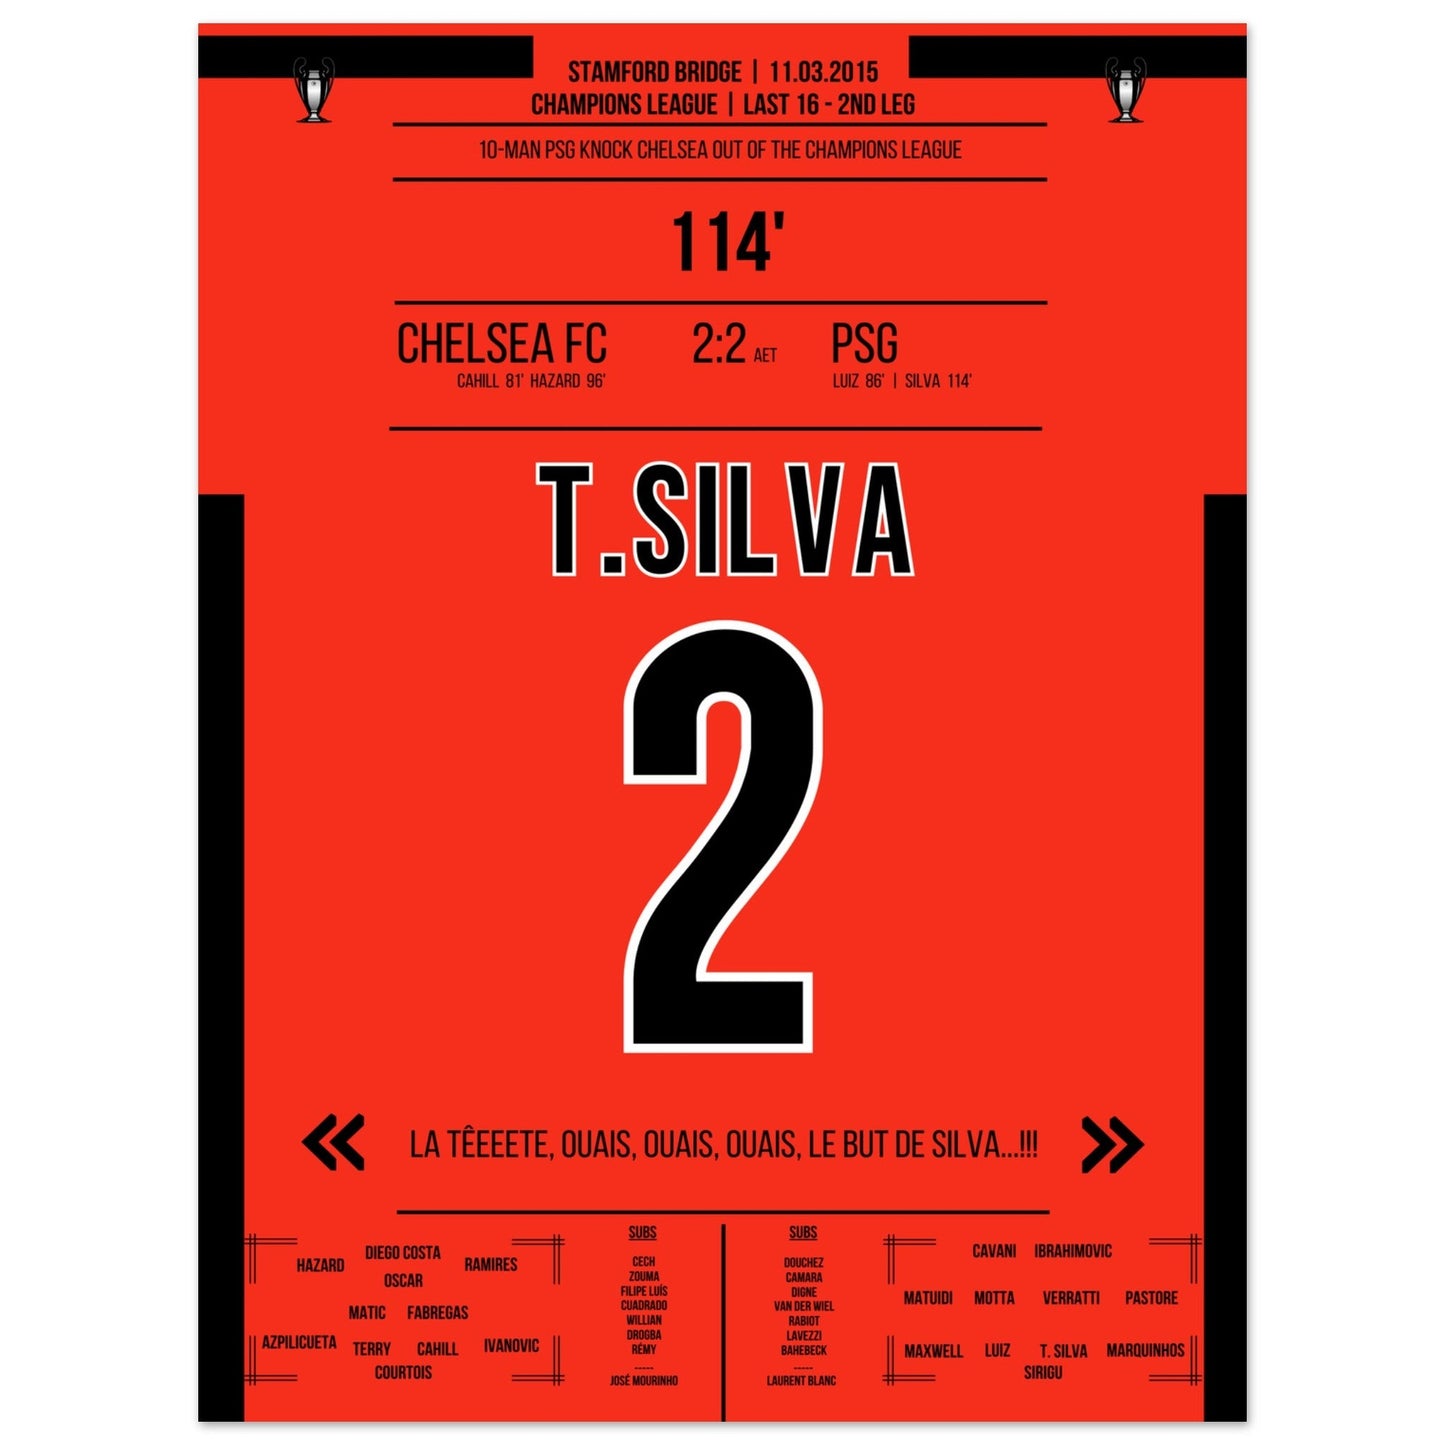 Thiago Silva's entscheidendes Kopfballtor im CL Achtelfinale gegen Chelsea 2015 45x60-cm-18x24-Ohne-Rahmen